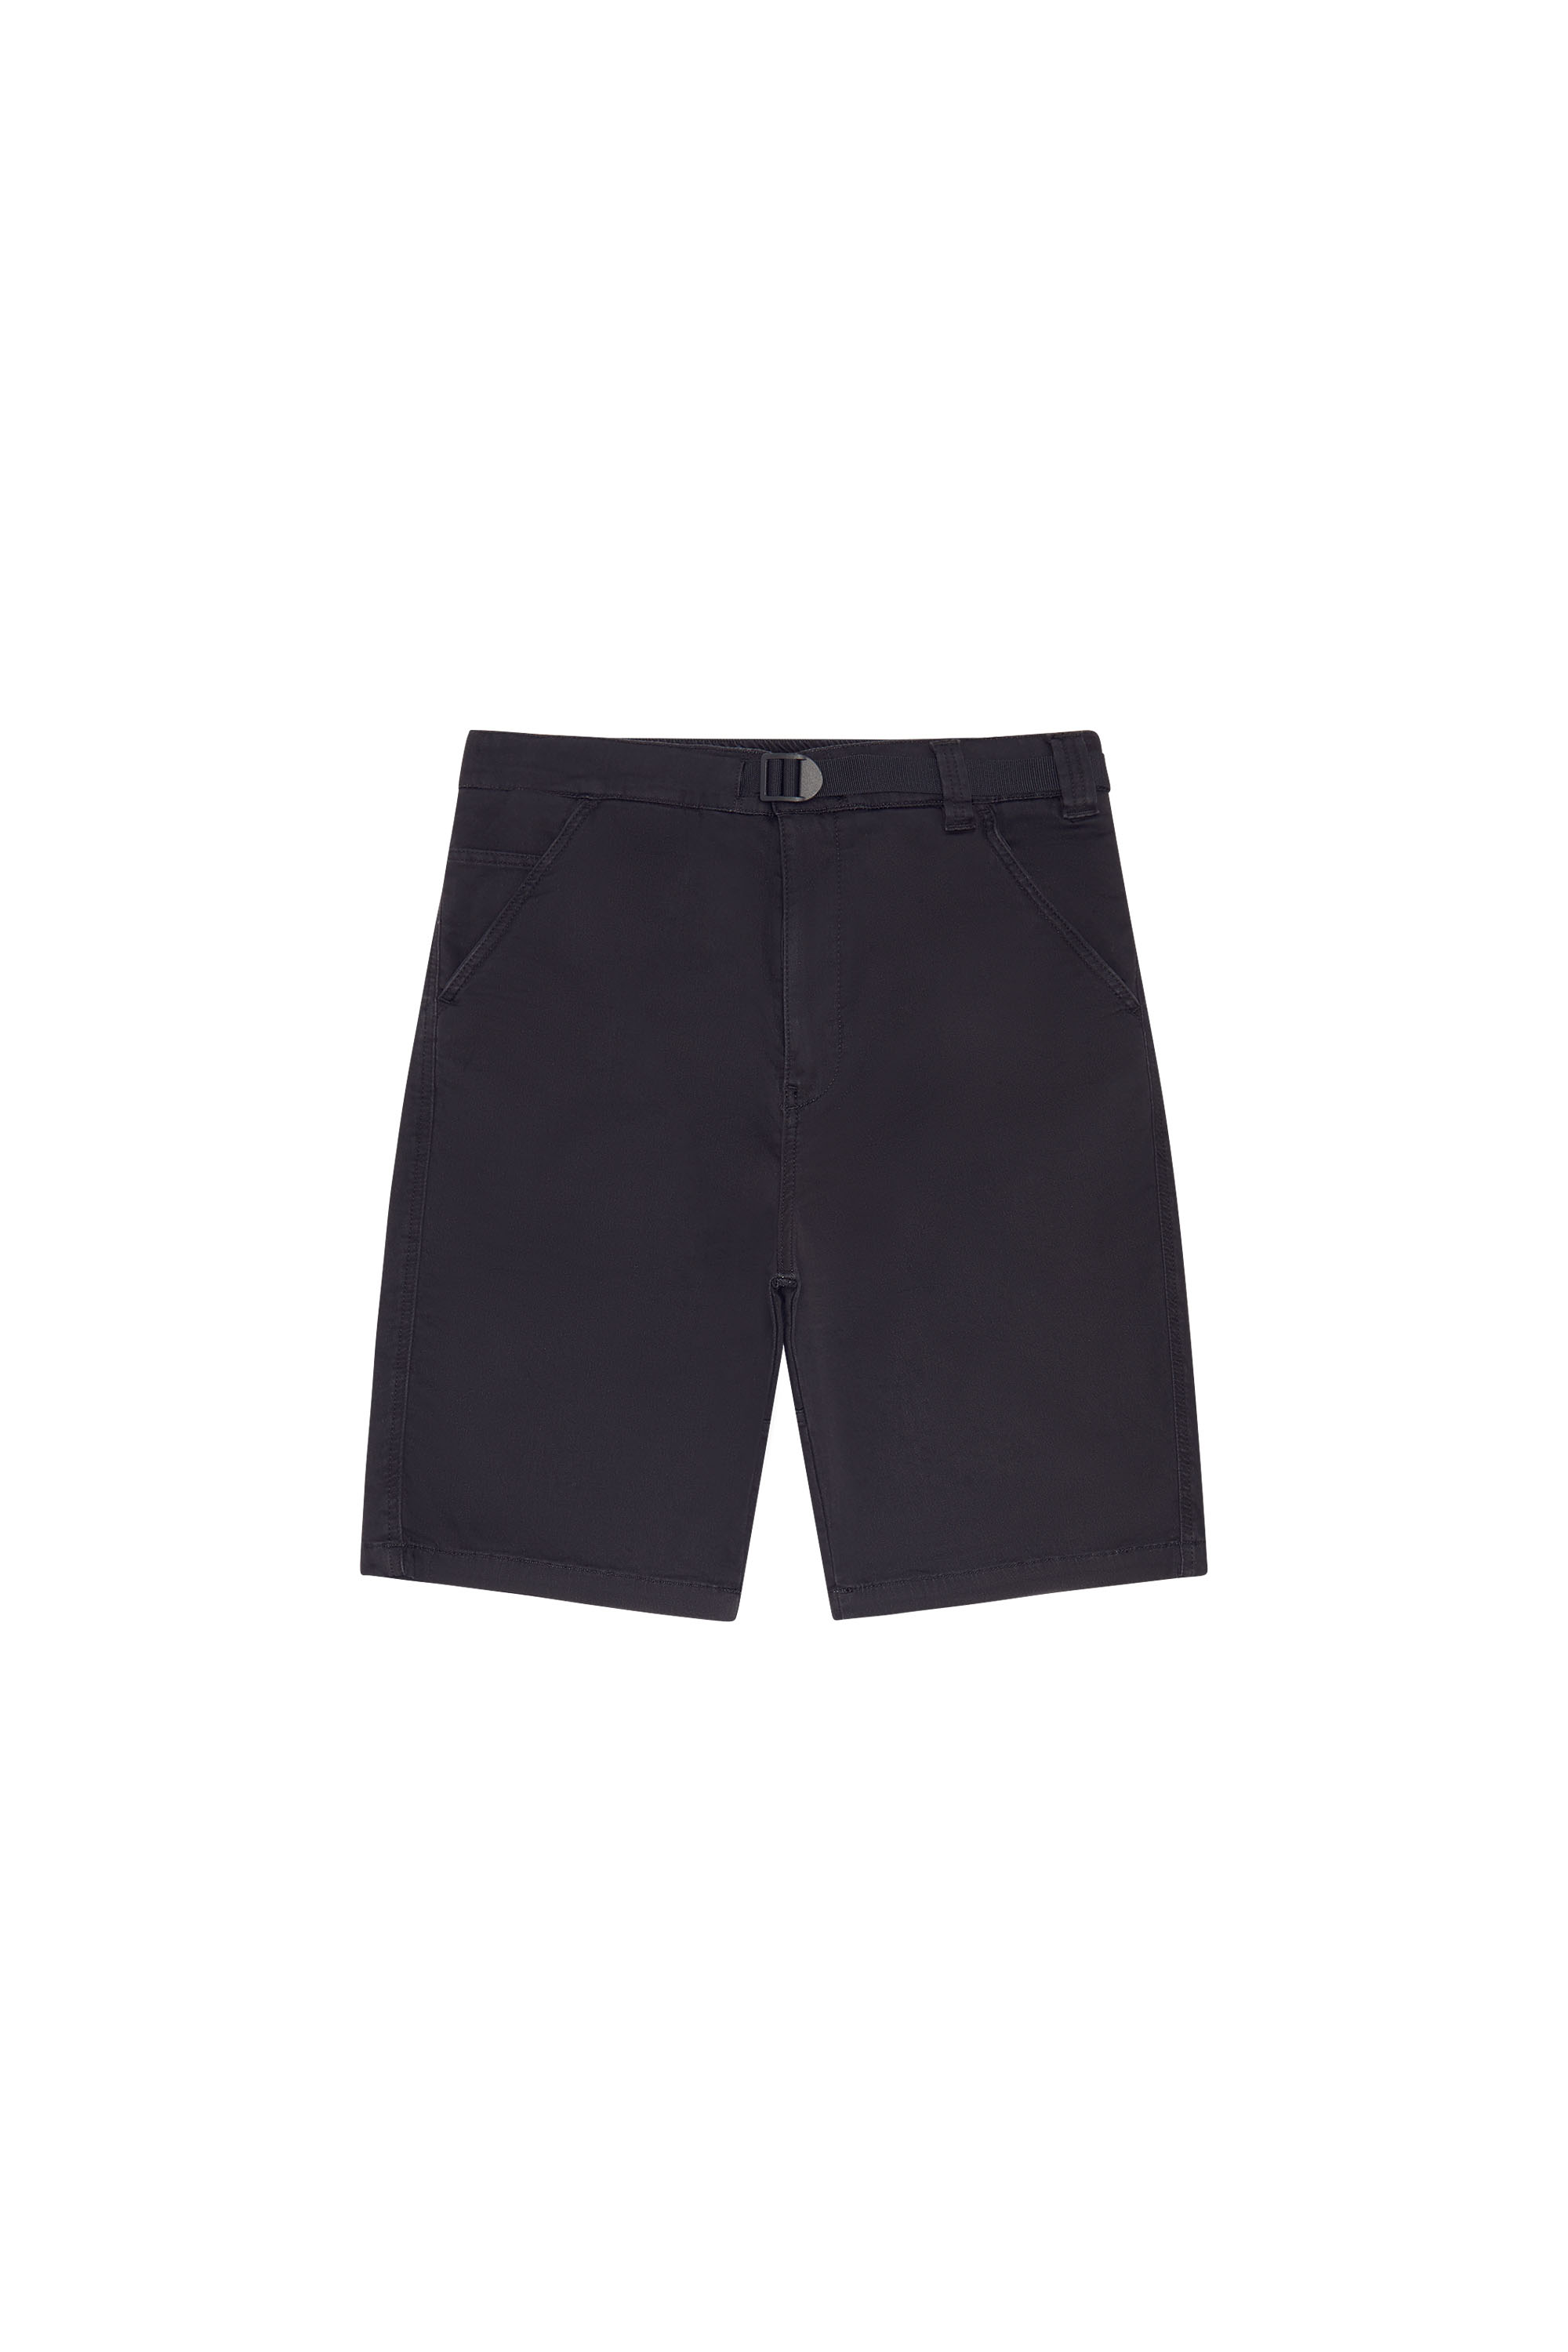 D-KROOLEY JOGGJEANS CHINO SHORTS, Black/Dark grey - Shorts